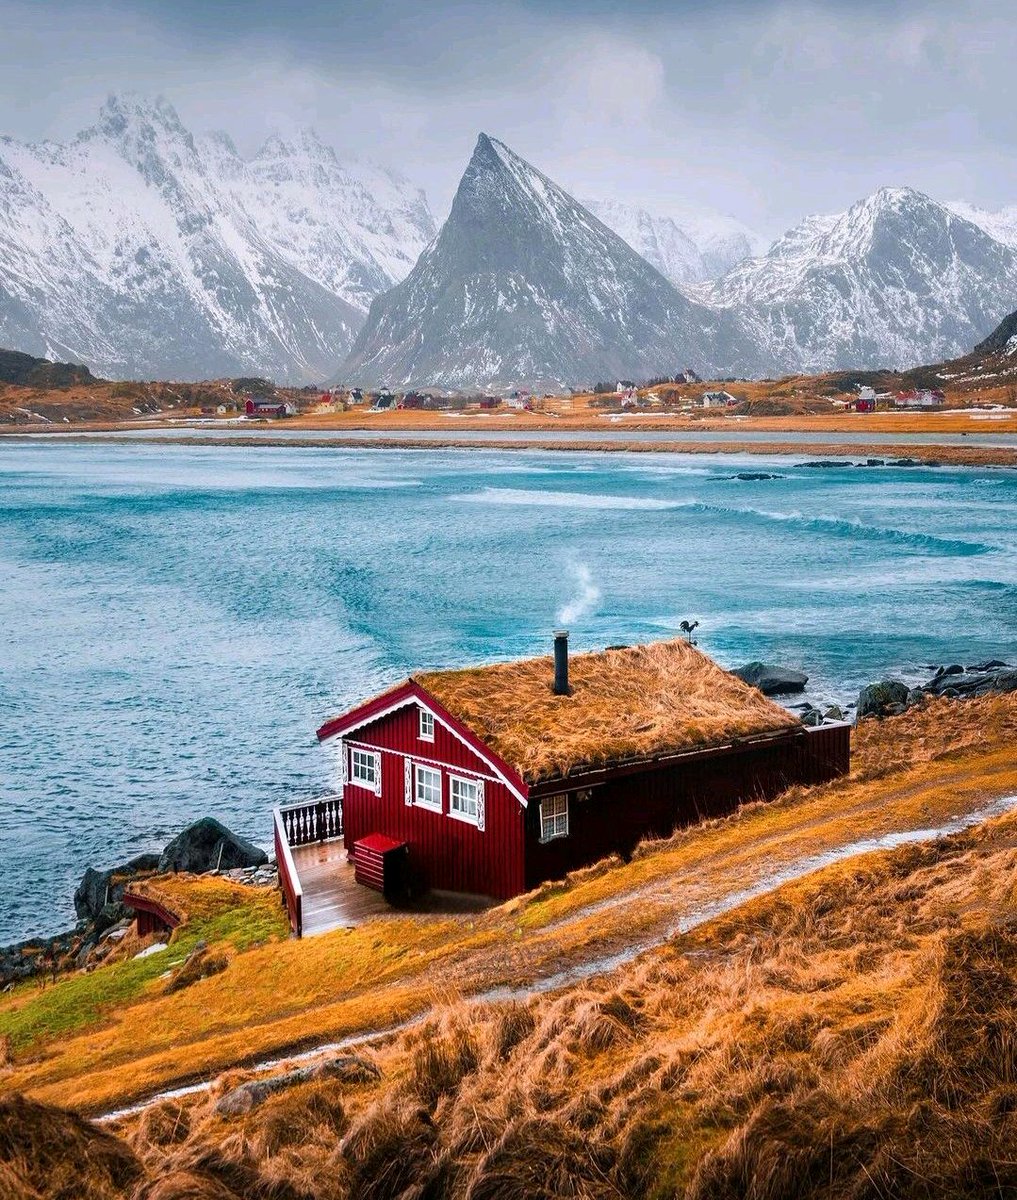 #Norway
#Nature   #Beauty   #Scenic   #ScenicBeauty